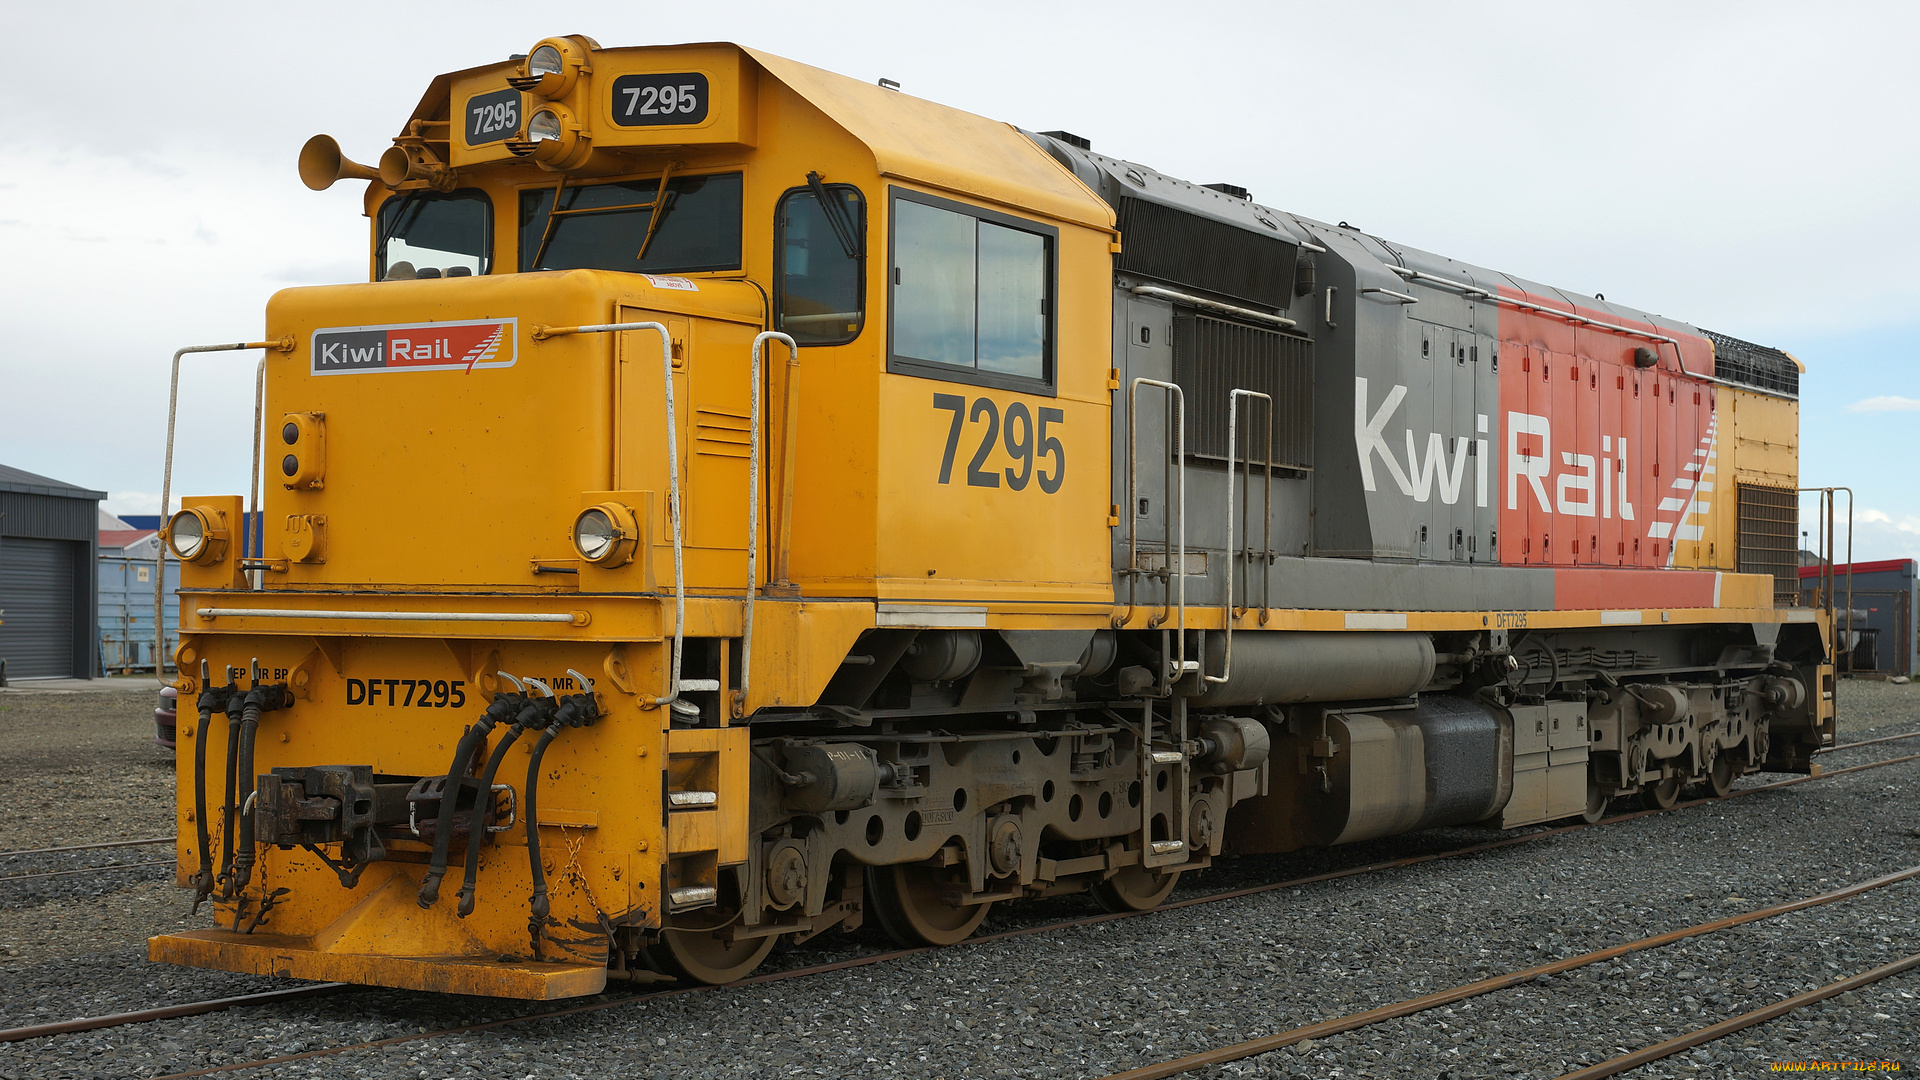 kiwirail, dft, 7295, техника, локомотивы, локомотив, рельсы, дорога, железная